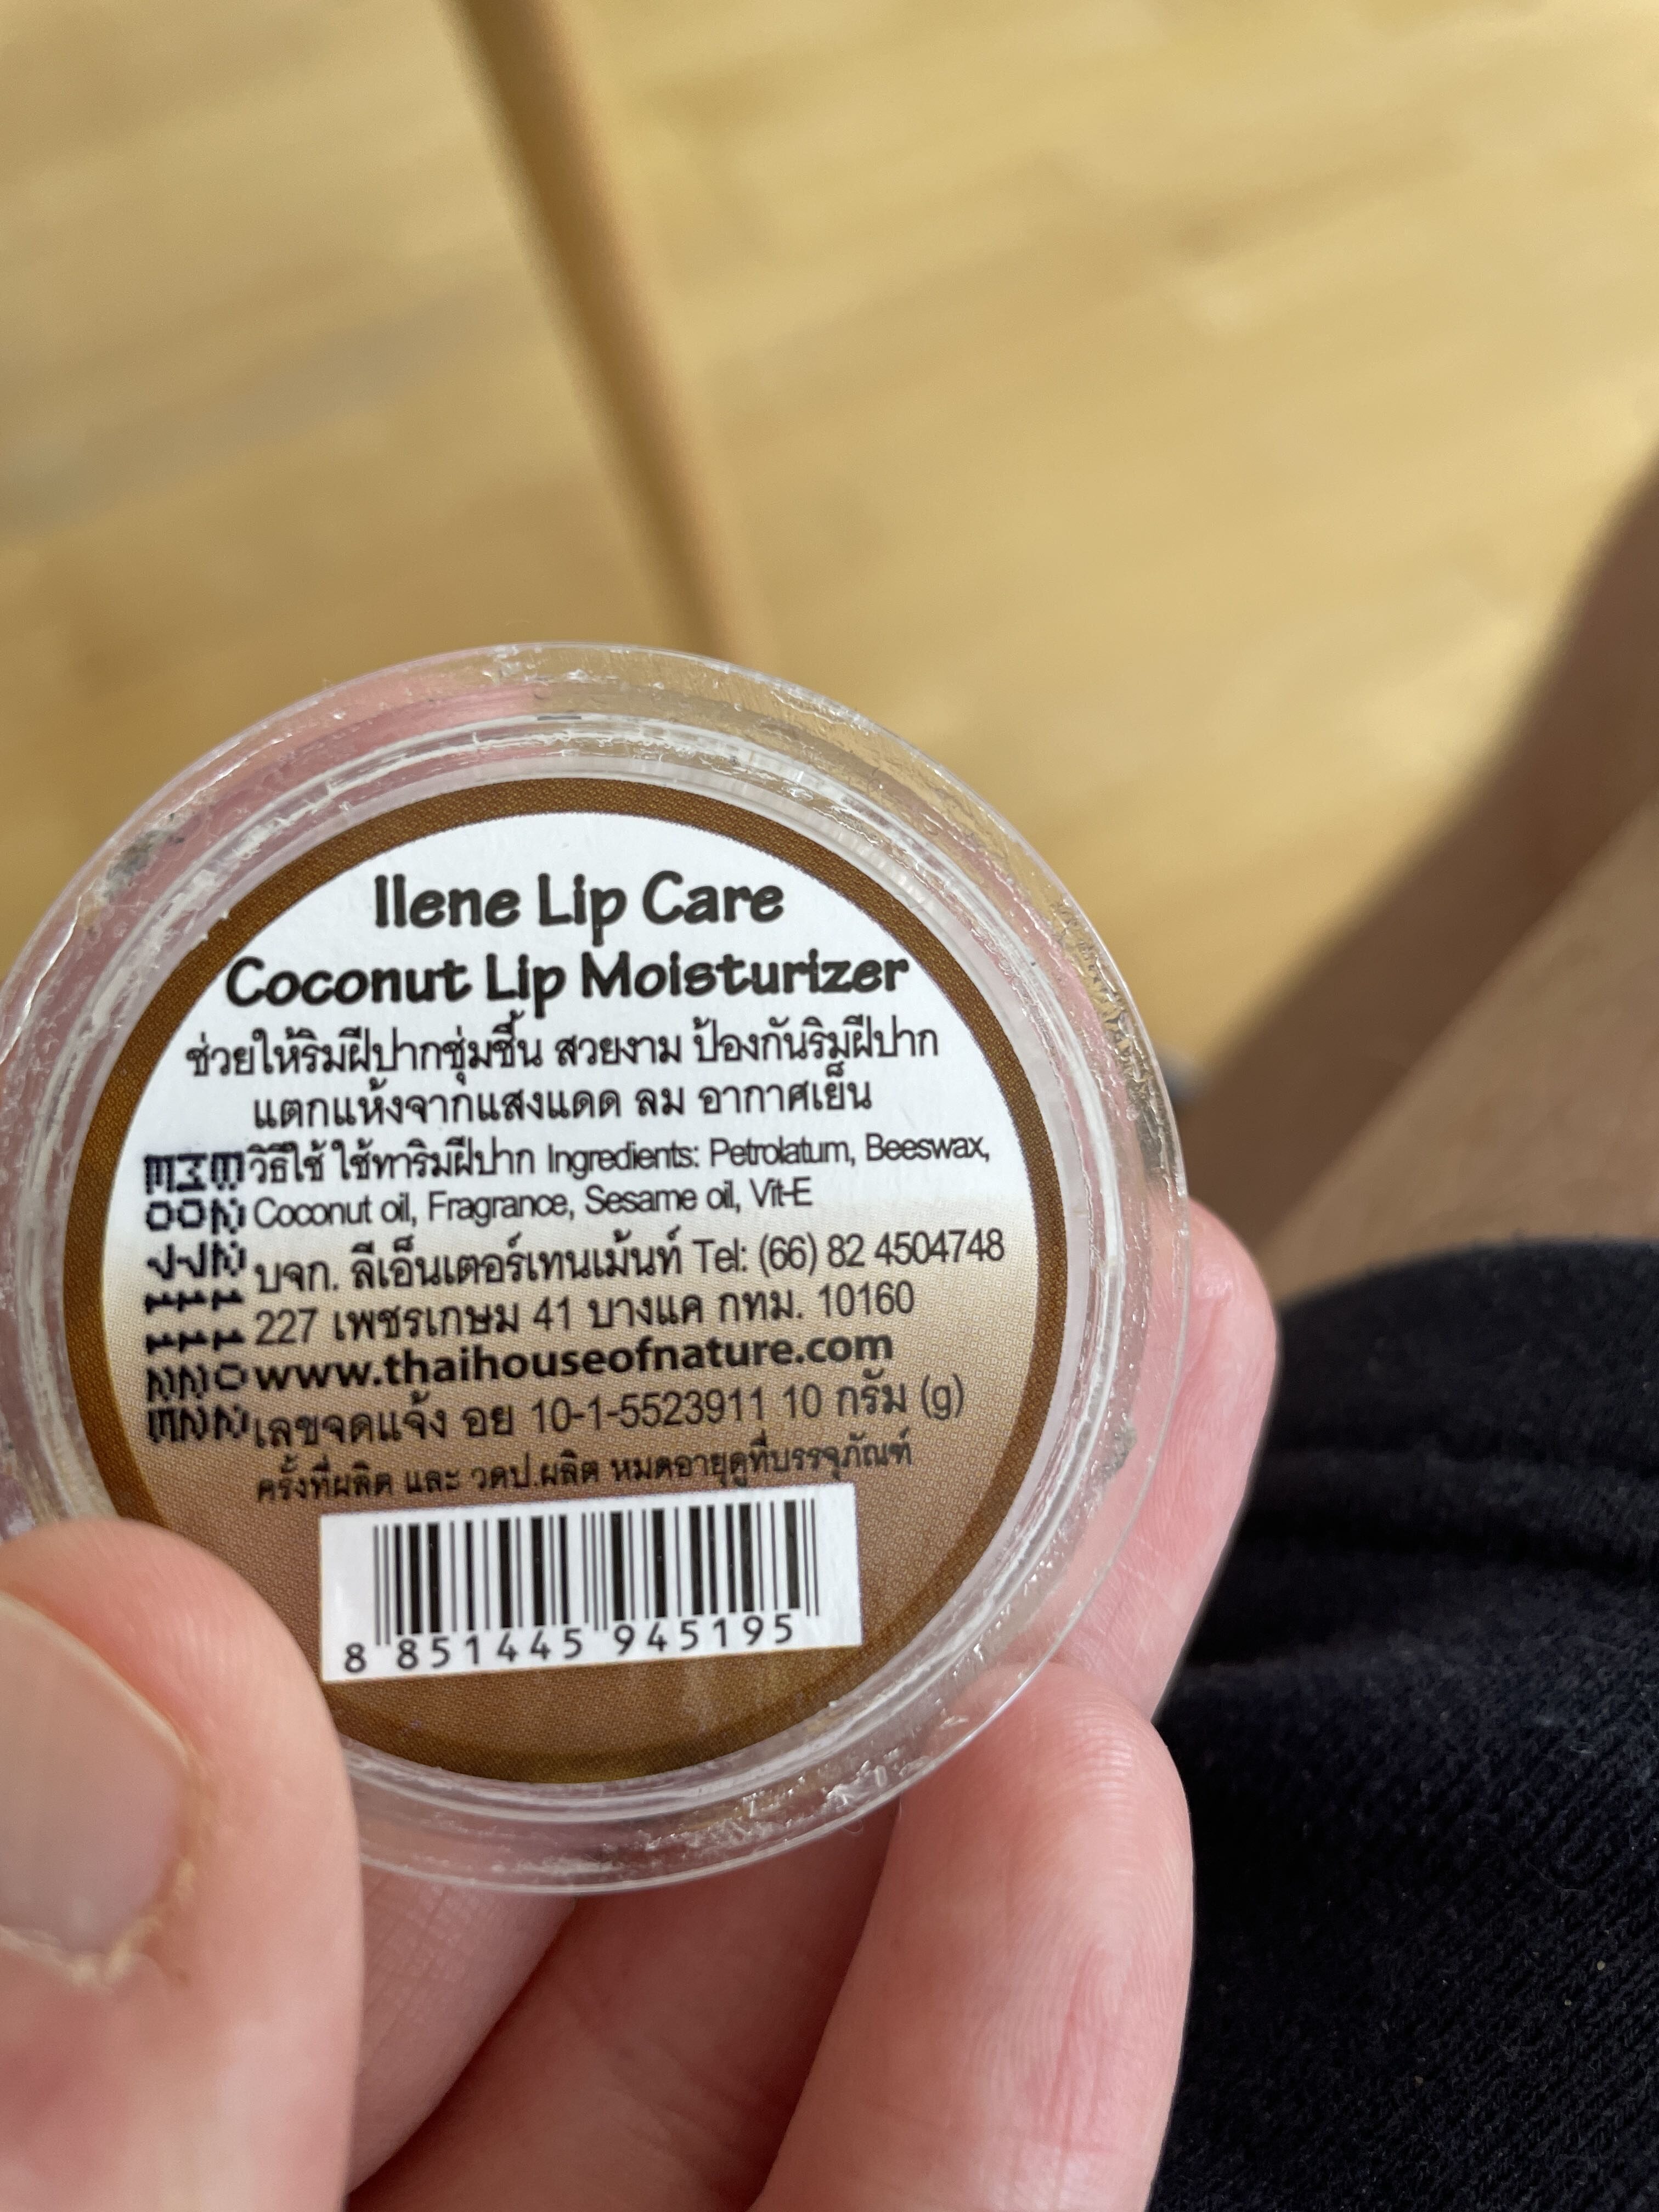 Coconut Lip Moisturizer - Product - en